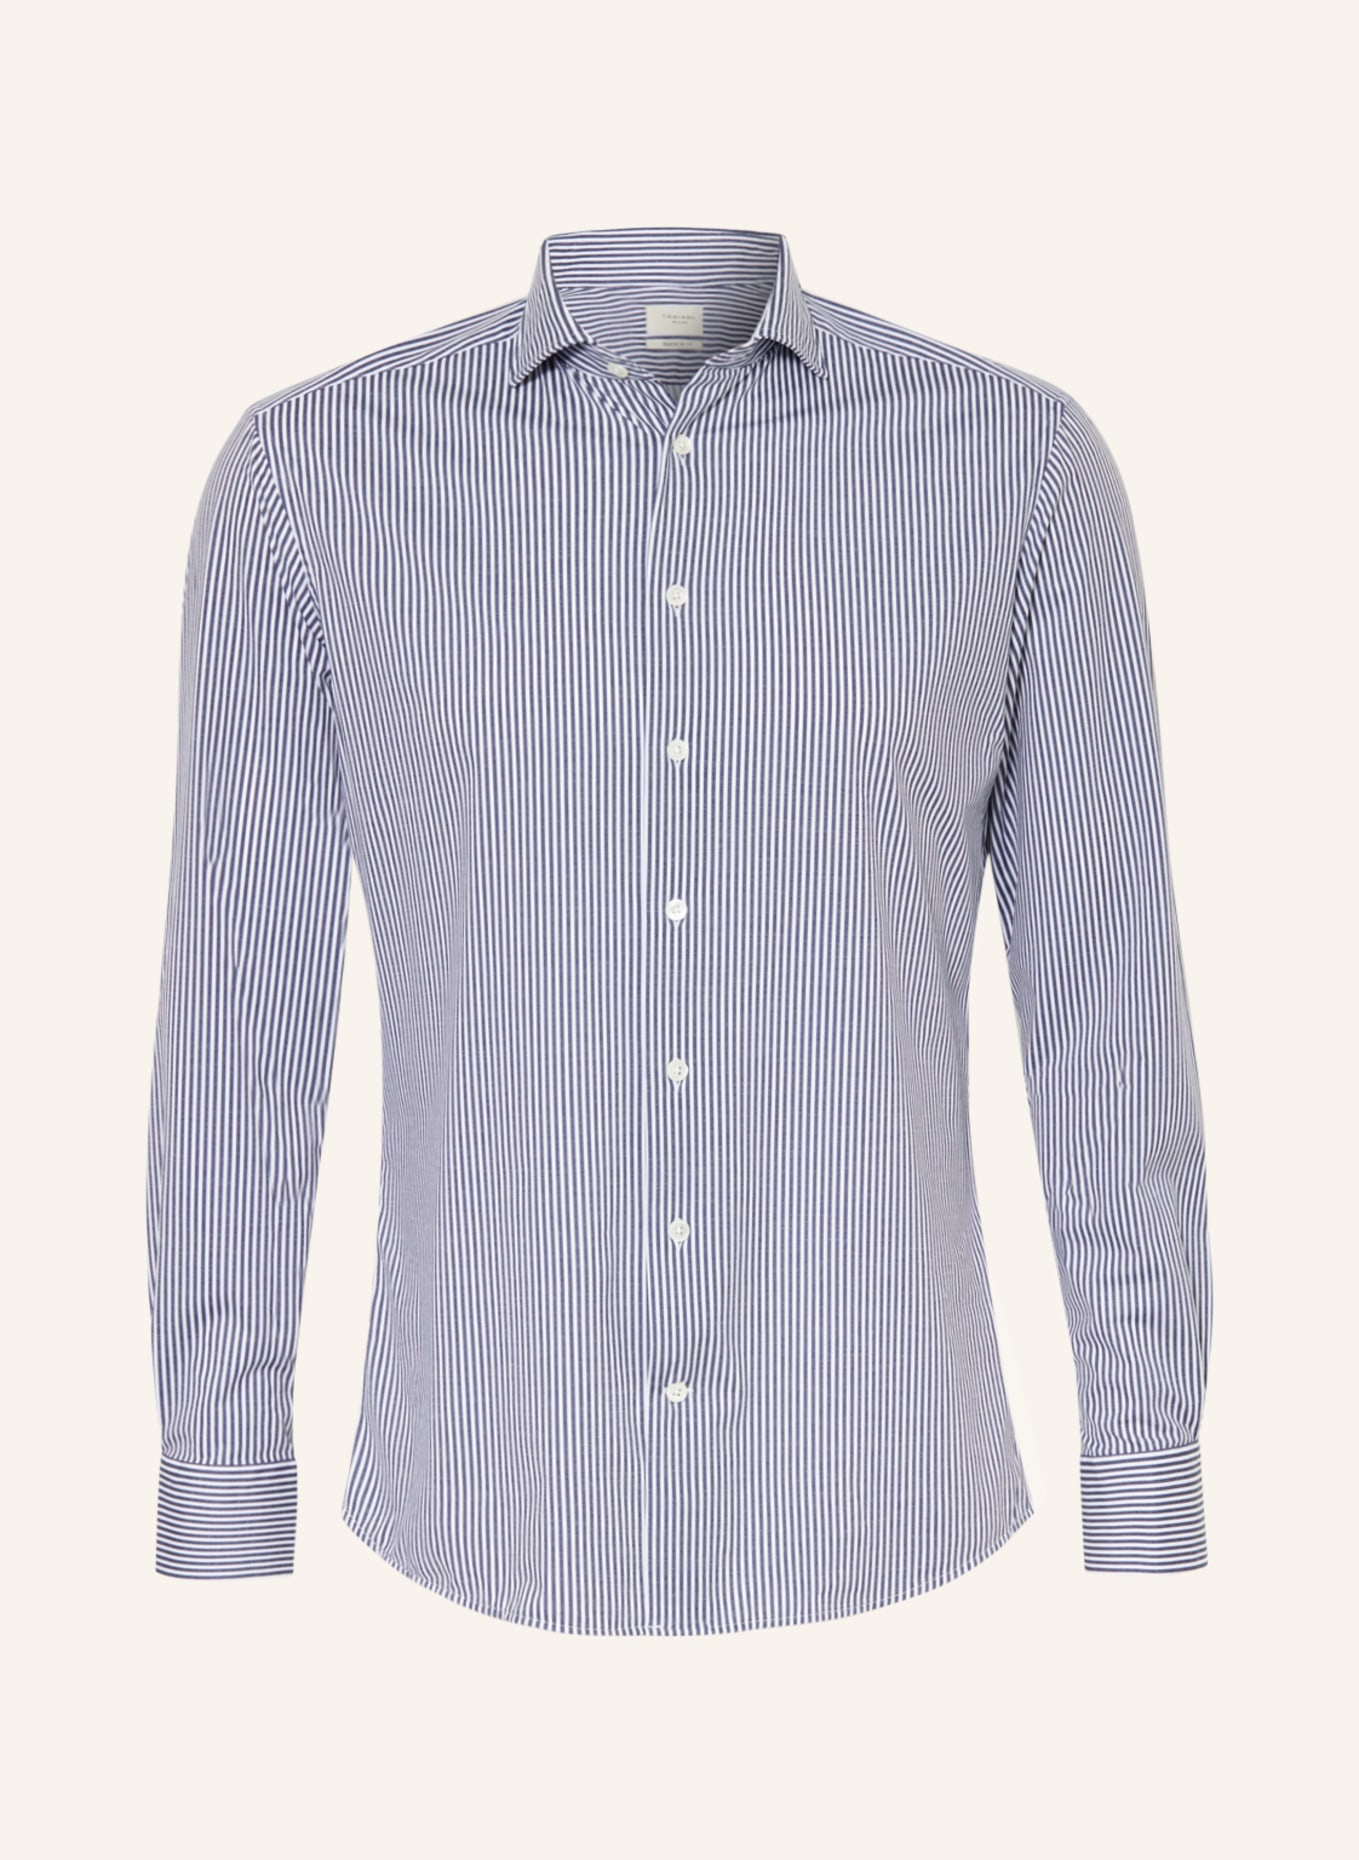 TRAIANO Jerseyhemd ROSSINI Slim Fit, Farbe: WEISS/ DUNKELBLAU (Bild 1)